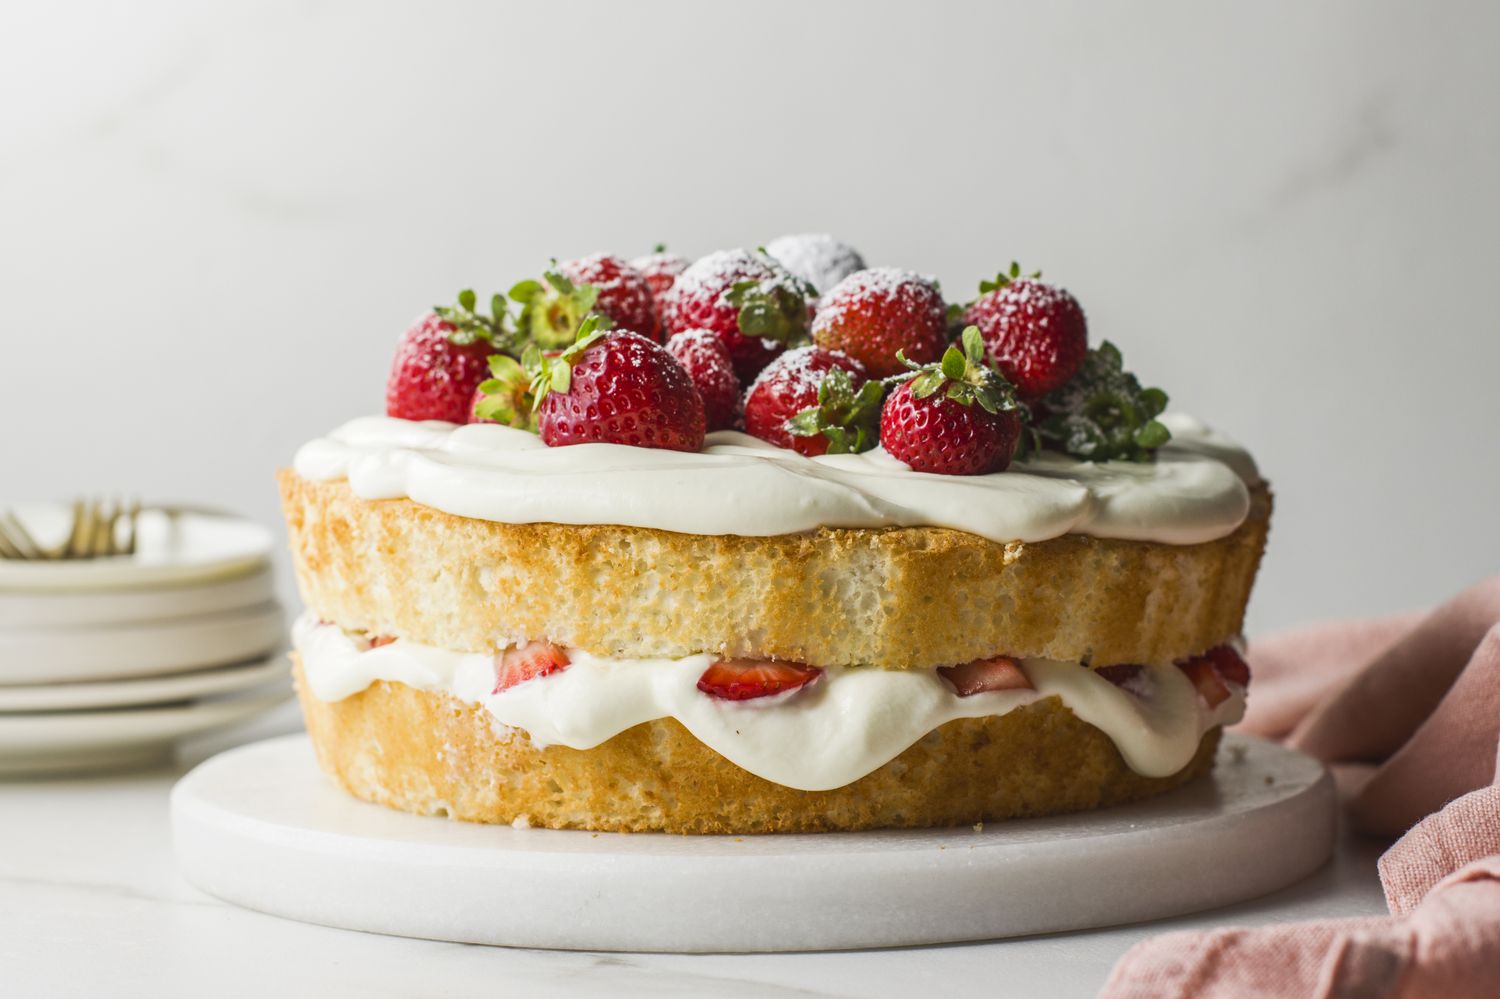 https://lucky-treats.com/strawberry-shortcake-recipe-with-angel-food-cake/